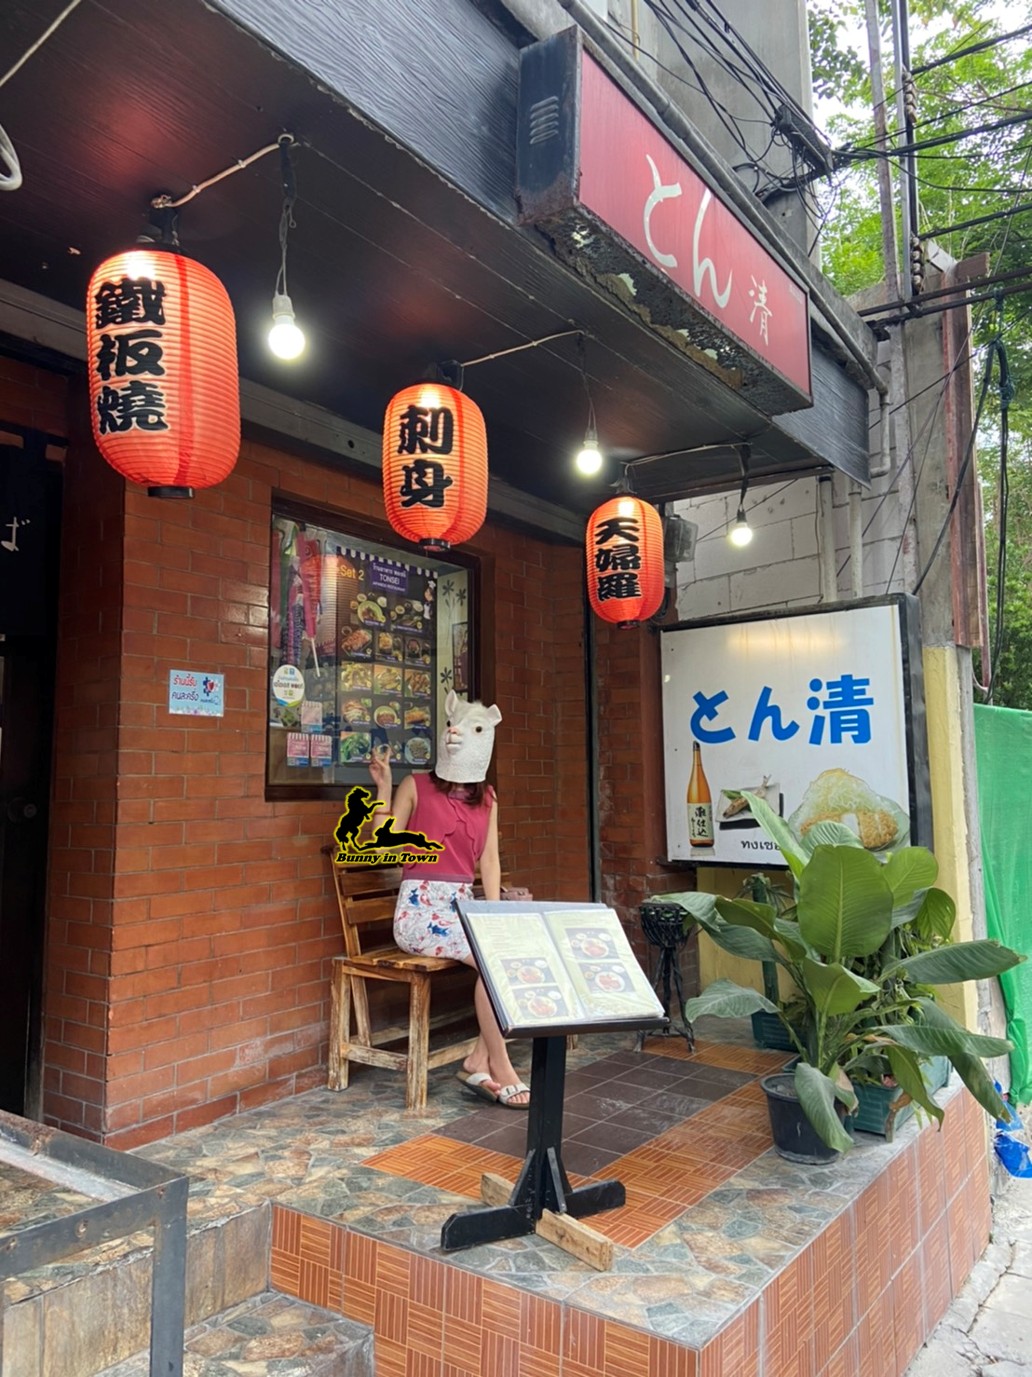 [CR] [รีวิว] ร้านอาหารญี่ปุ่น ใจกลางเมือง เก่าแก่กว่า40ปี ร้านอาหารญี่ปุ่น Tonsei (ทงเซอิ) pantip